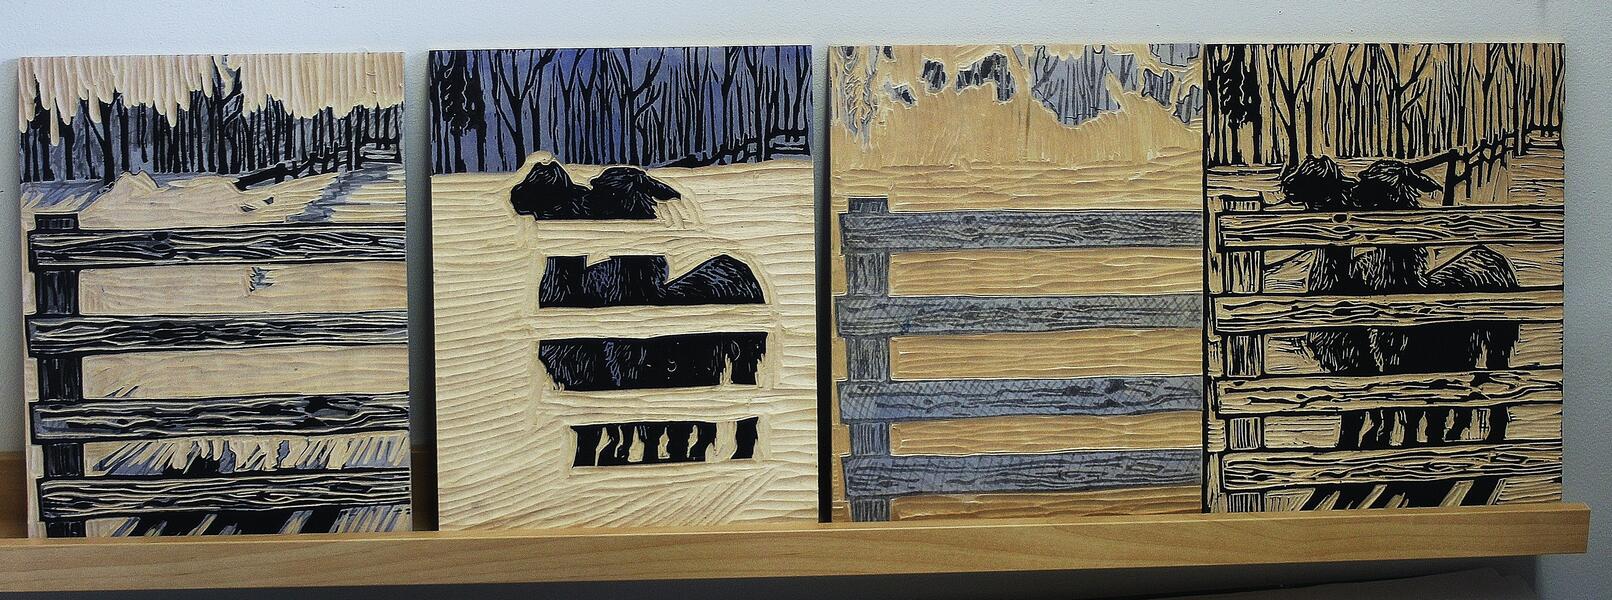 Carved woodblocks for printing Alpacas